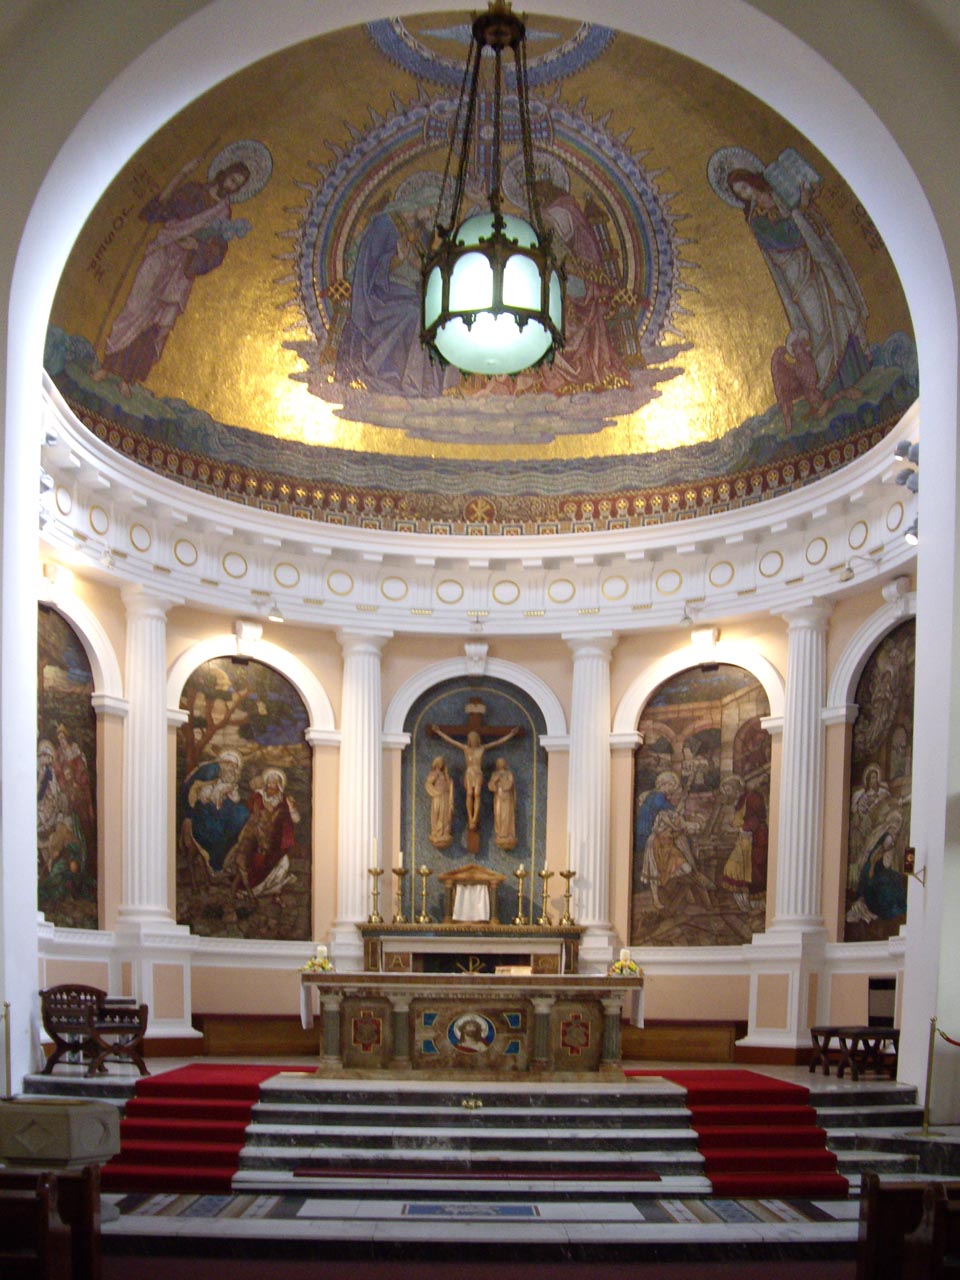 The Interior of the Roman Catholic Church of St Joseph, Heywood